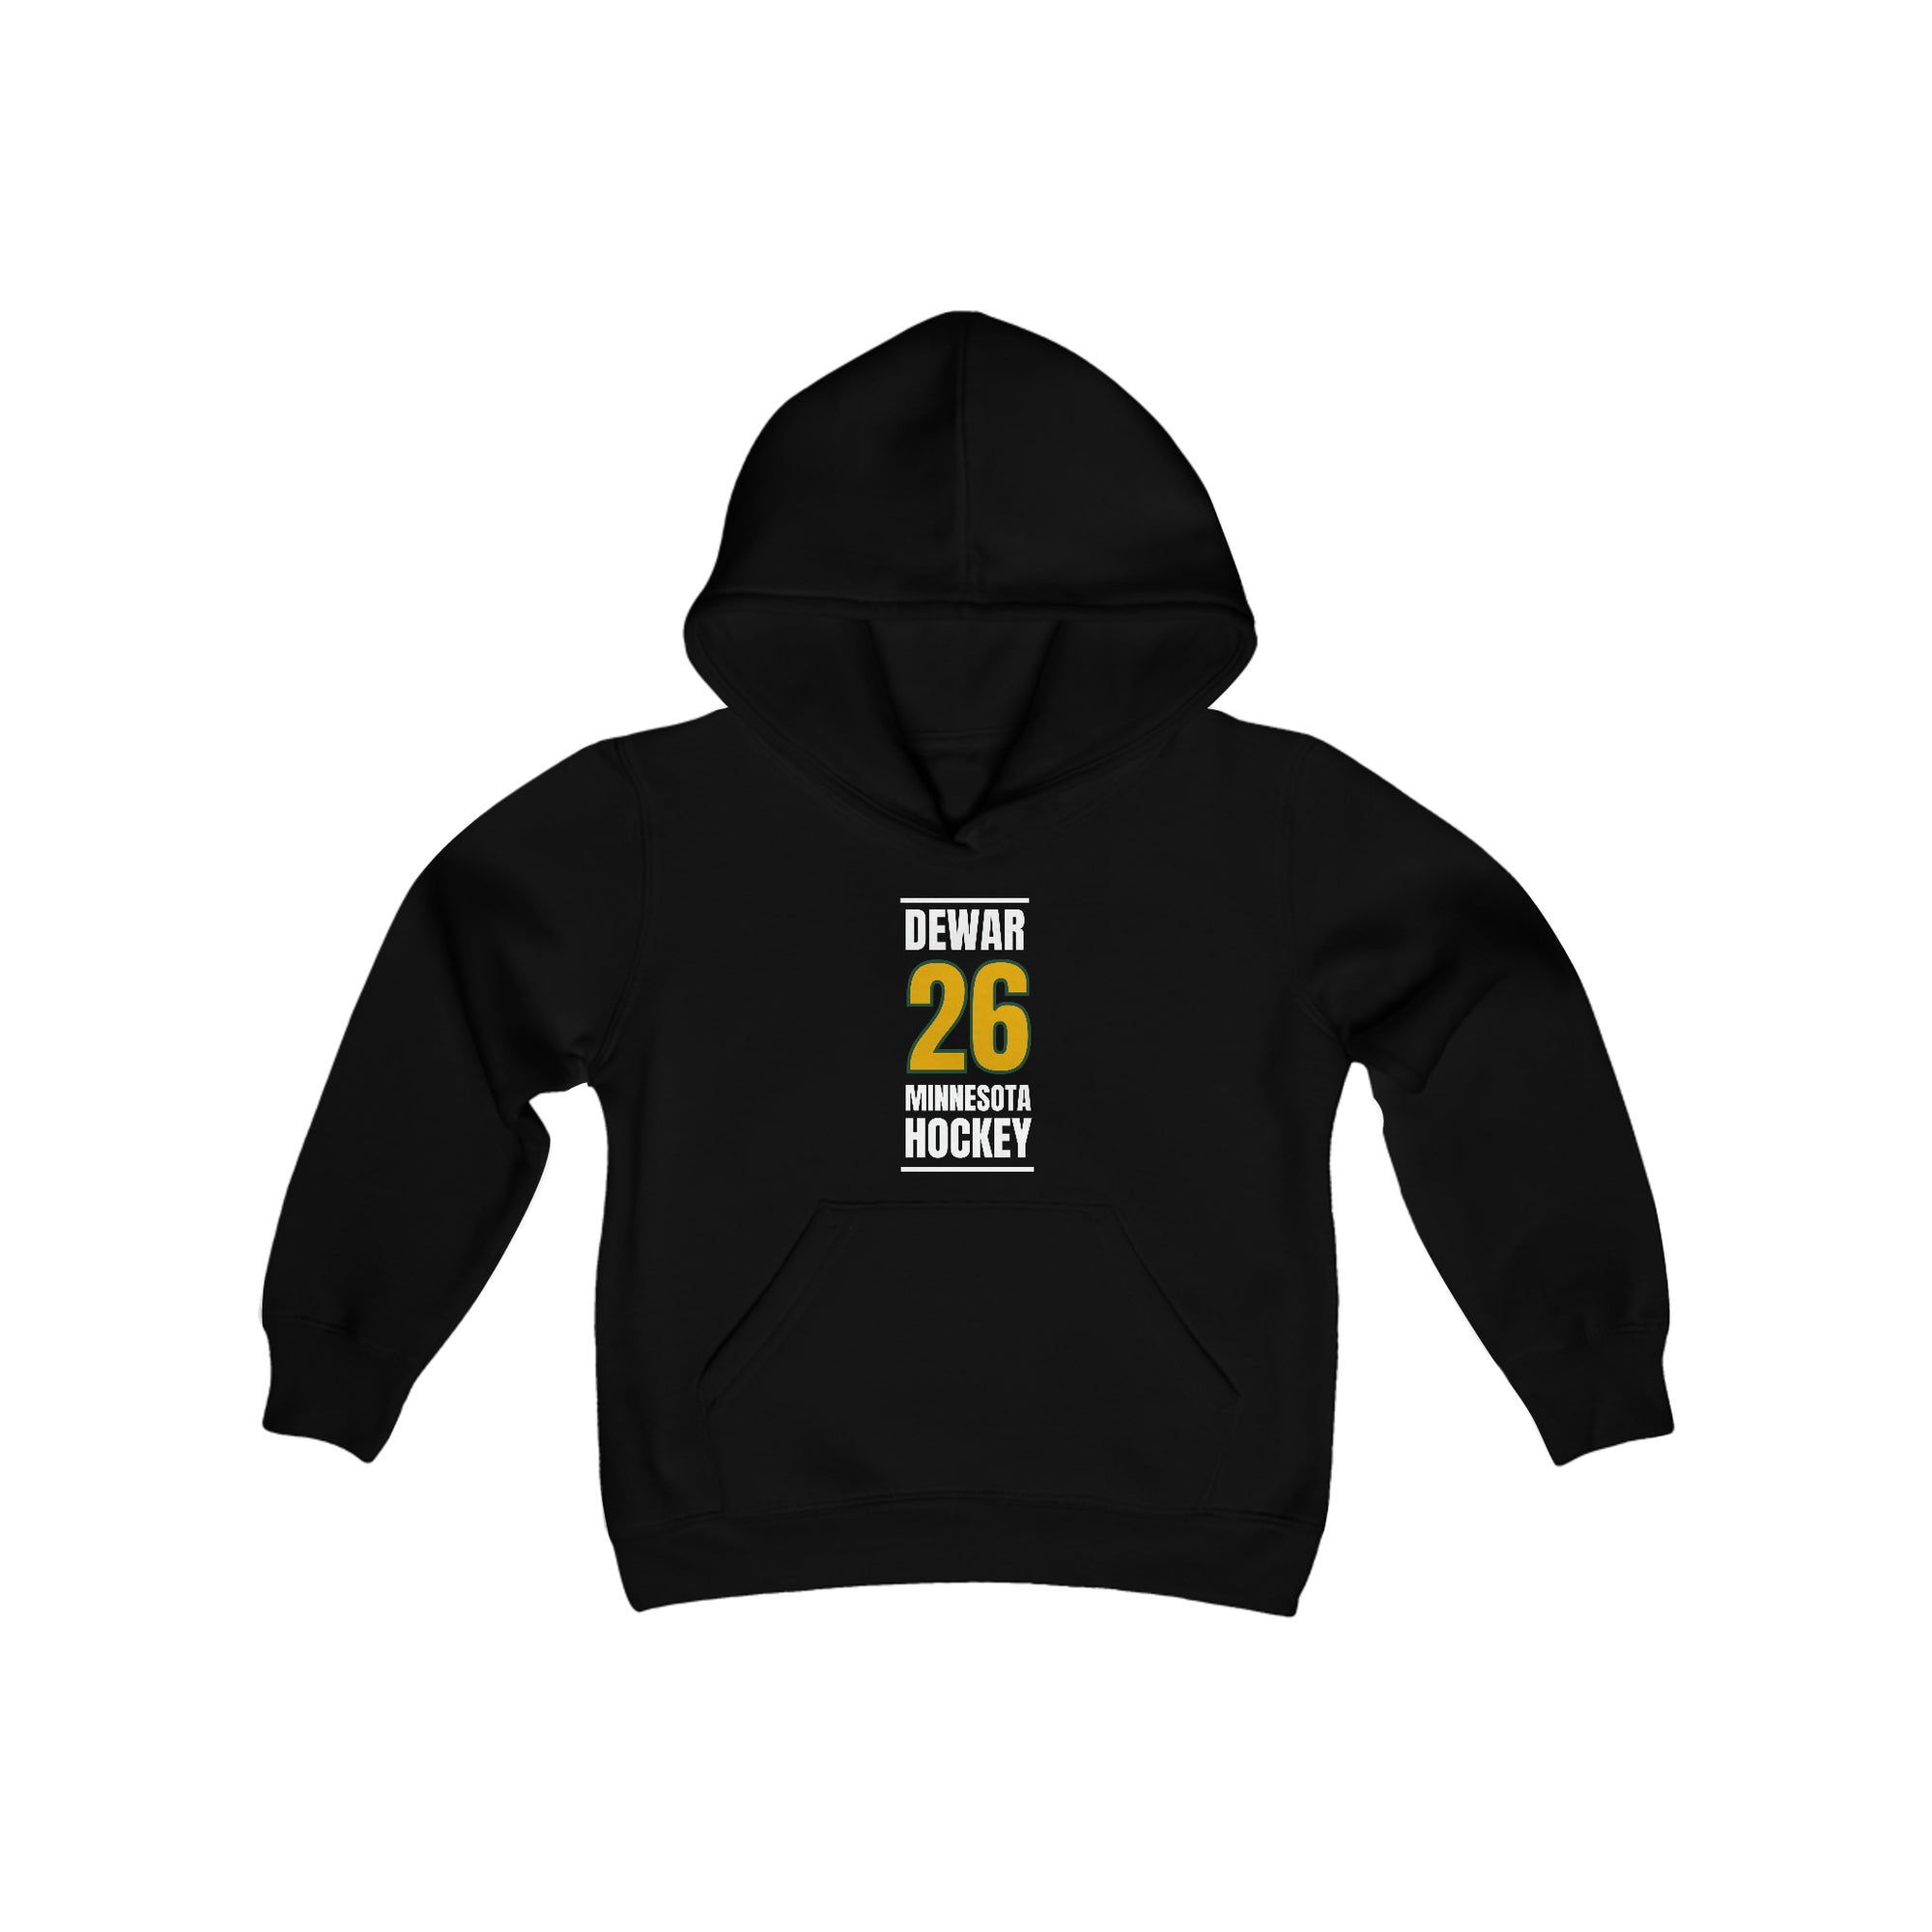 Dewar 26 Minnesota Hockey Gold Vertical Design Youth Hooded Sweatshirt